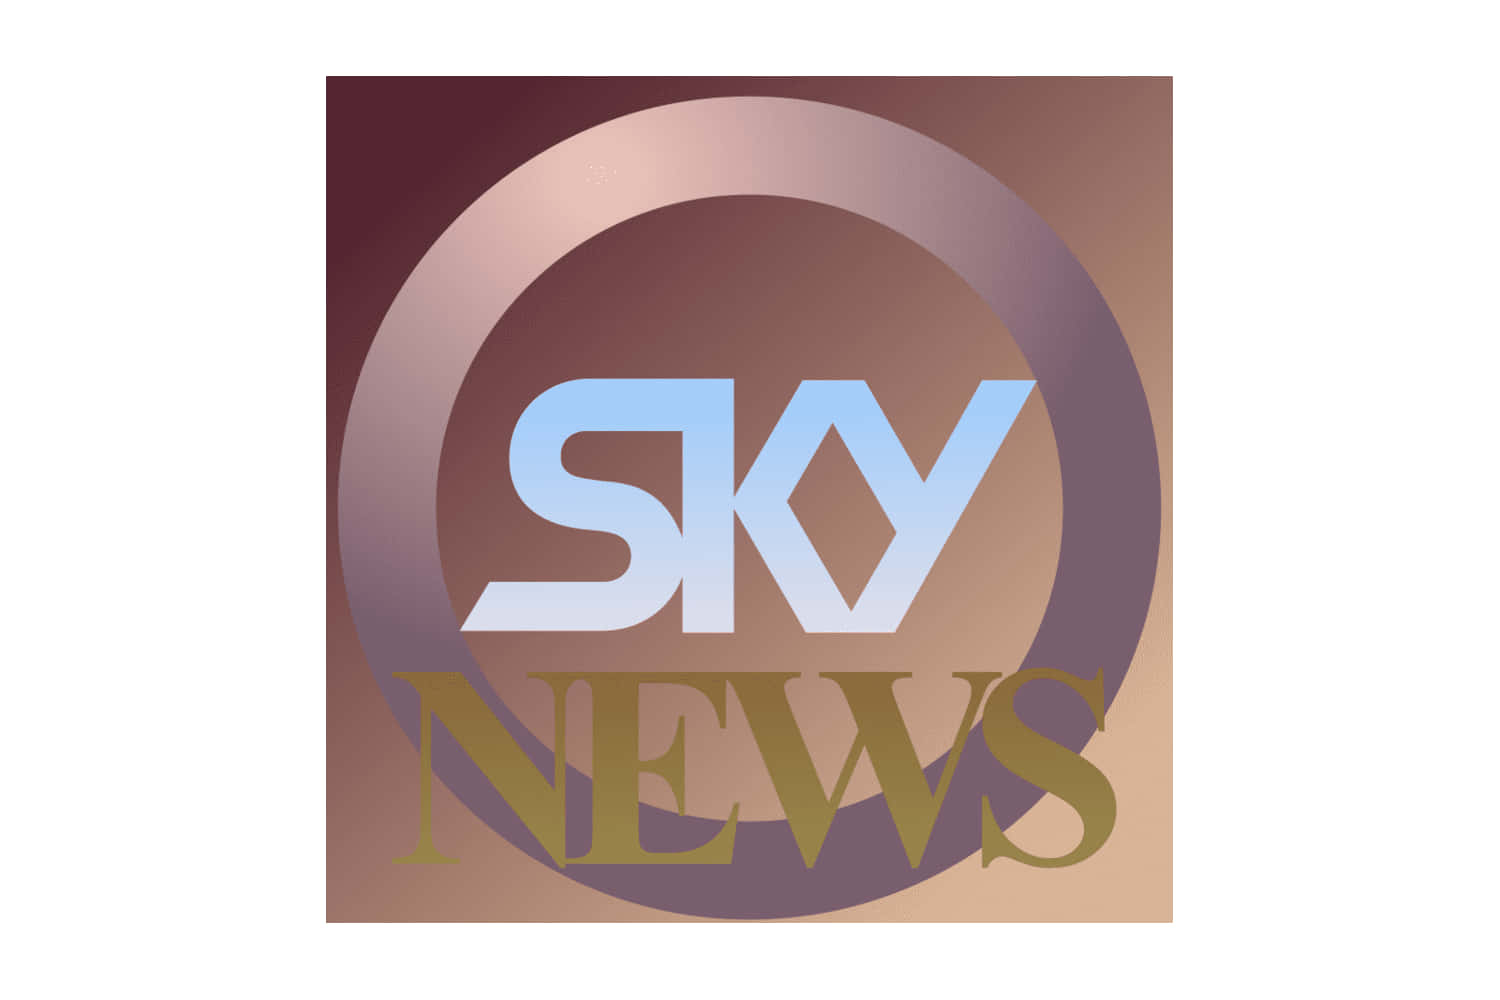 Sky News Pink Logo Wallpaper